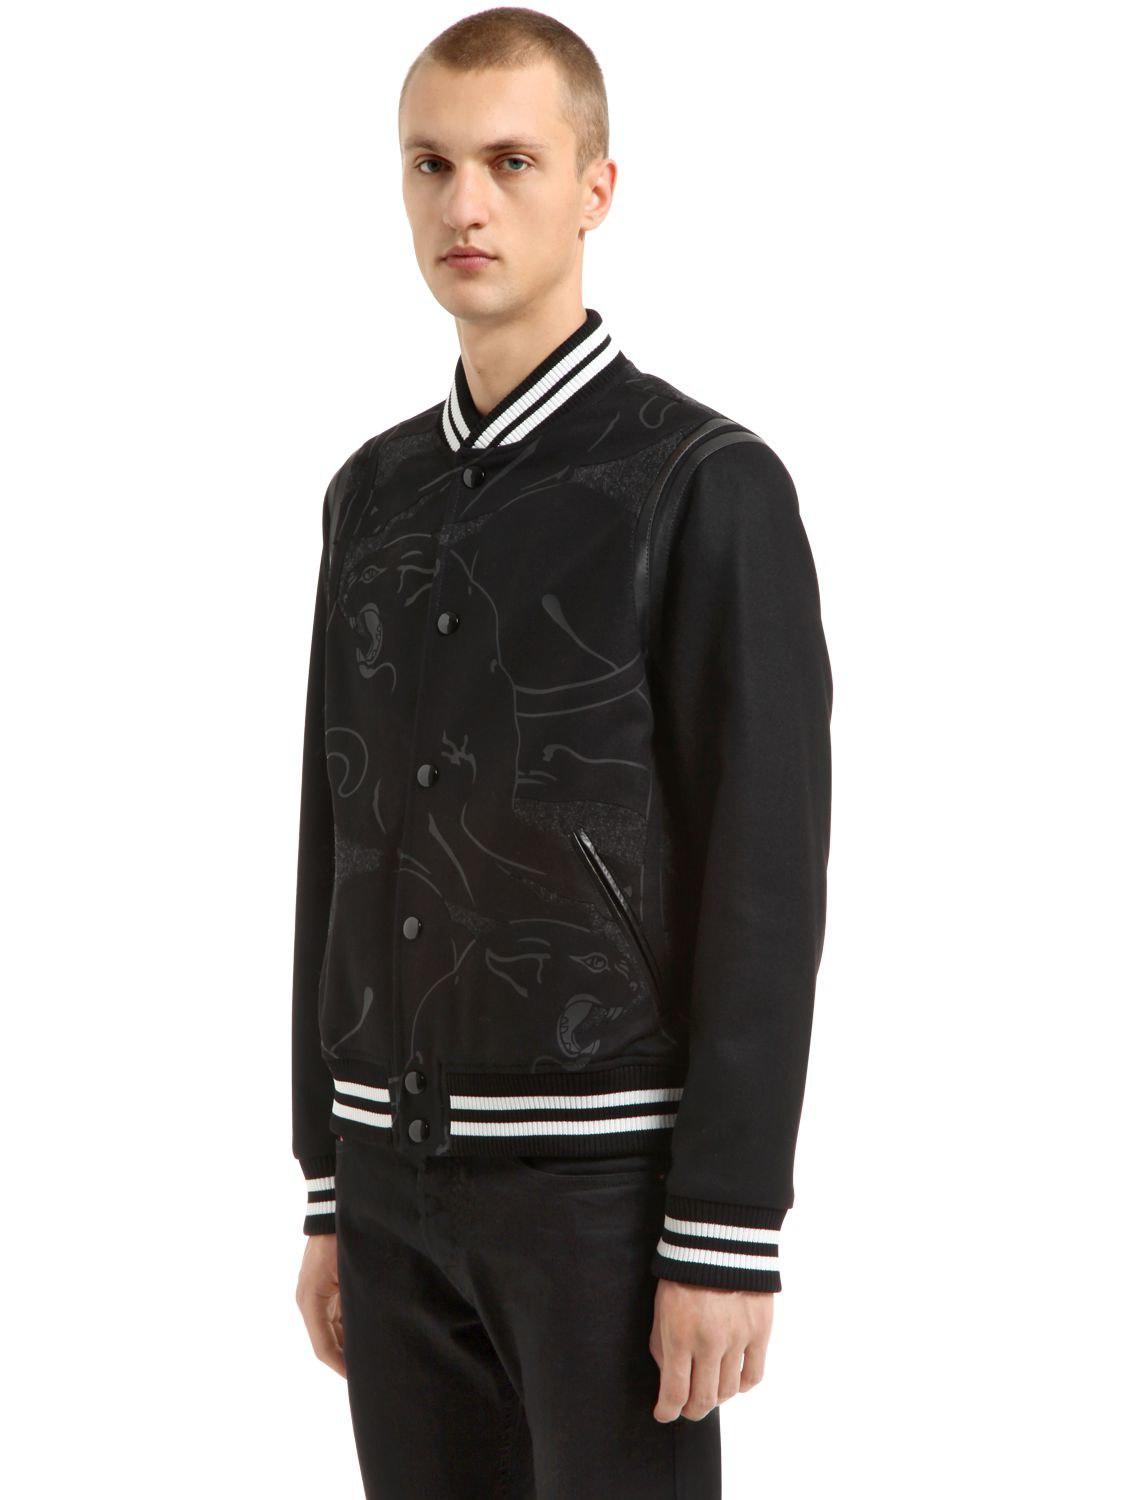 Valentino Panther Leather & Wool Varsity Jacket in Black/Grey ...